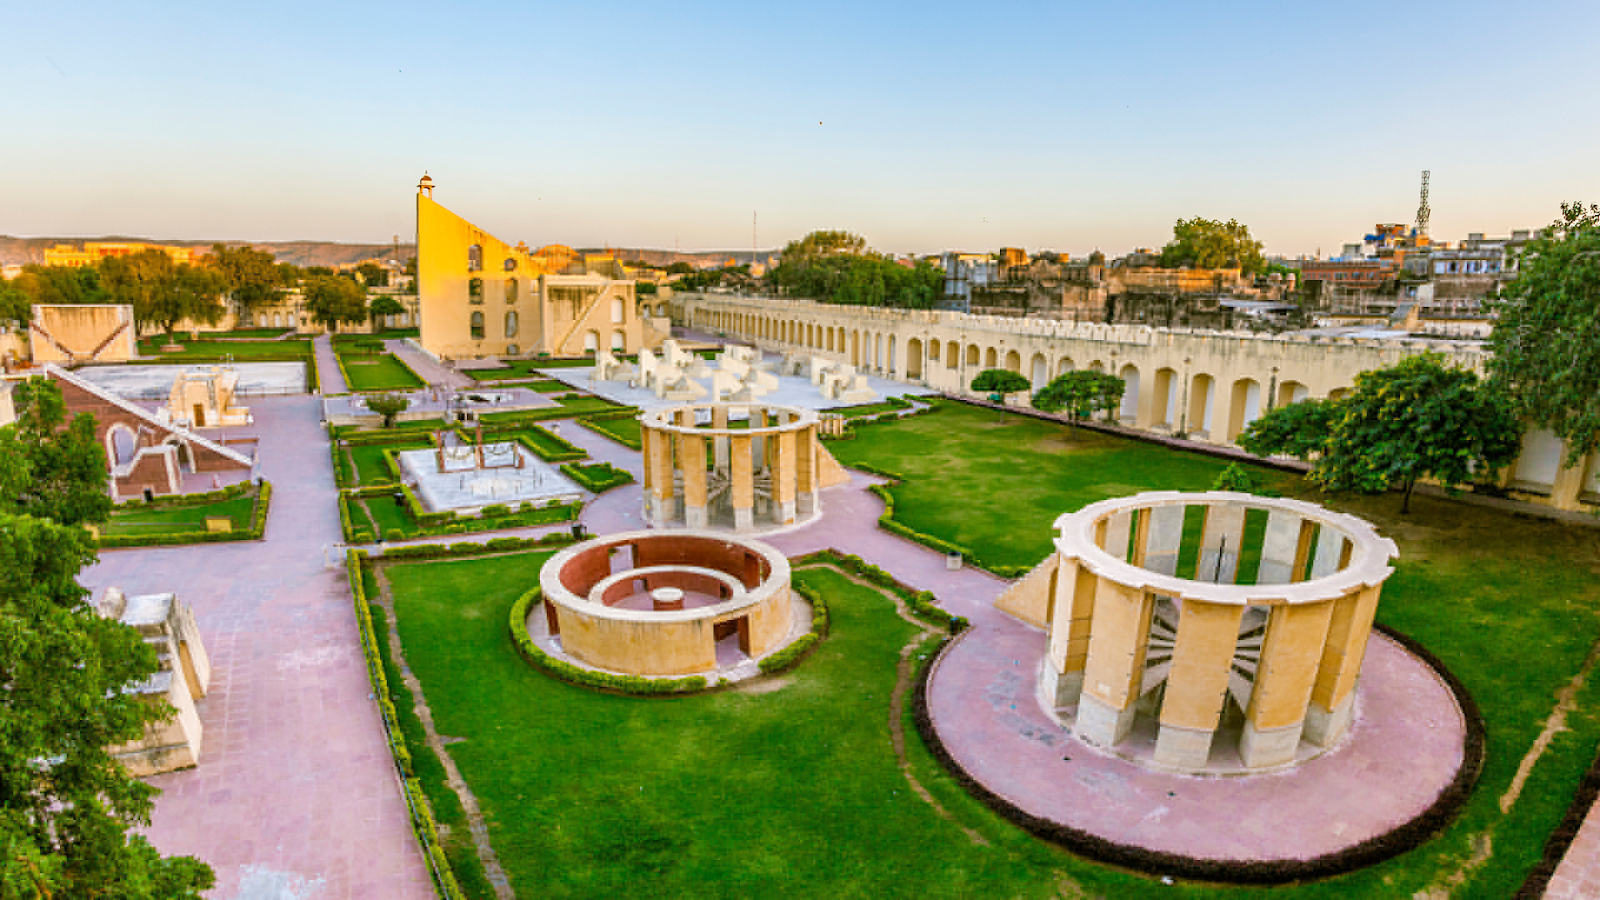 Jantar Mantar top 5 places to visit in Jaipur